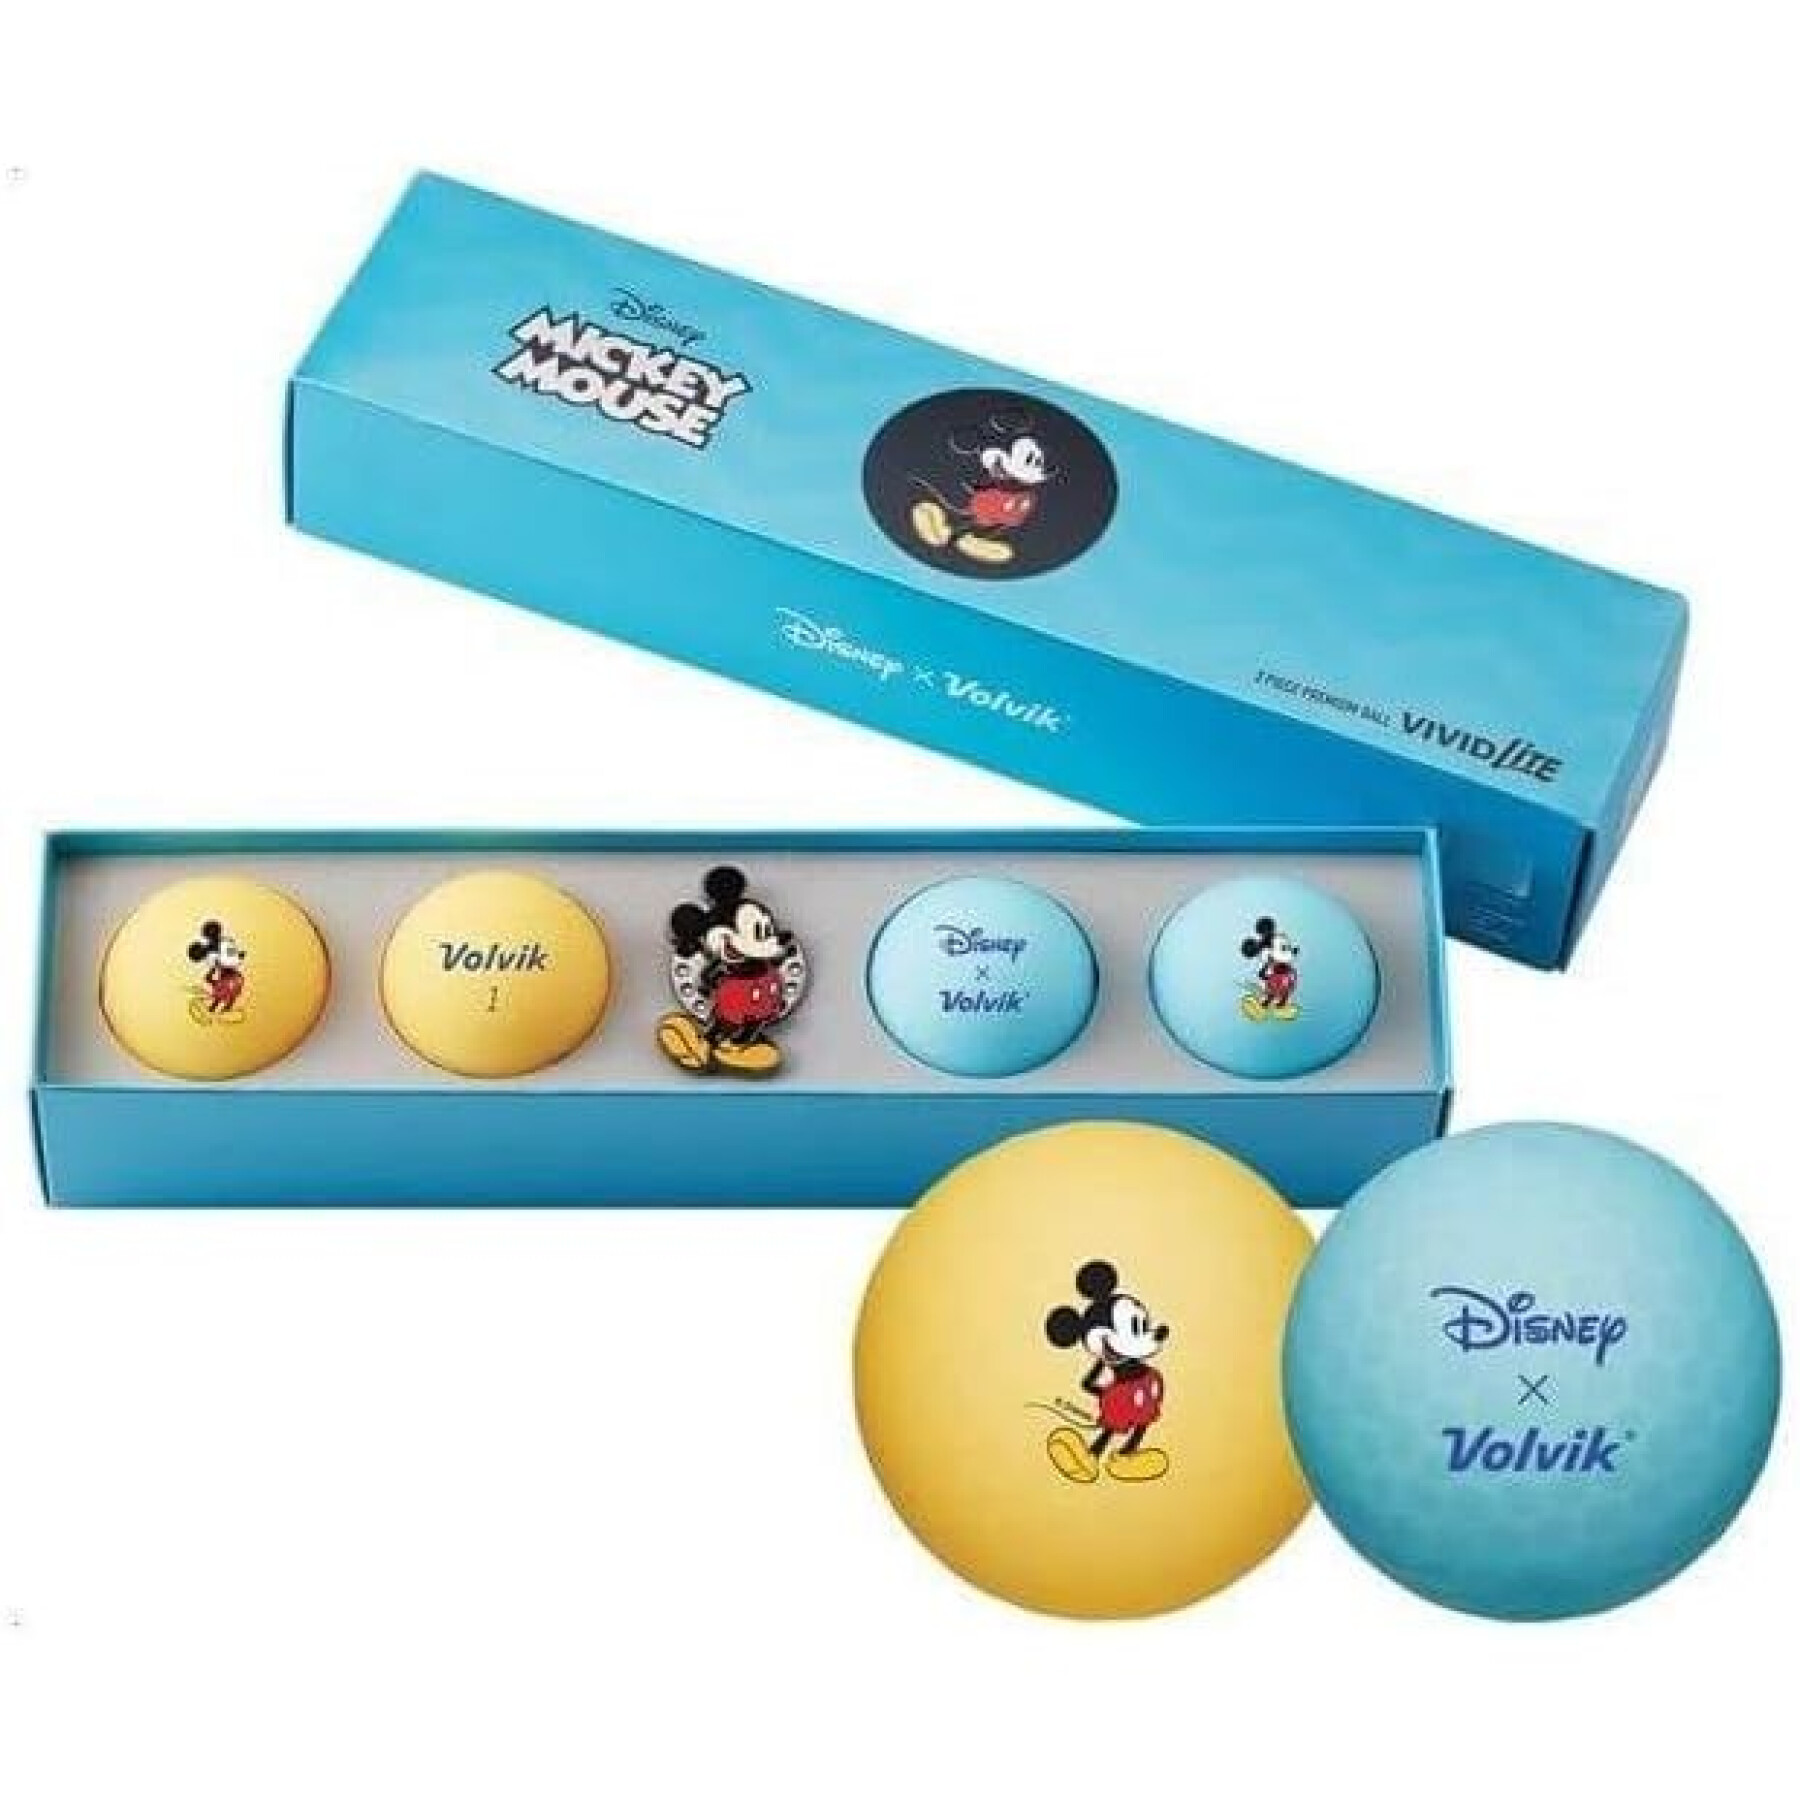 Fancy golf ball Volvik Vivid Lite Mickey Mouse